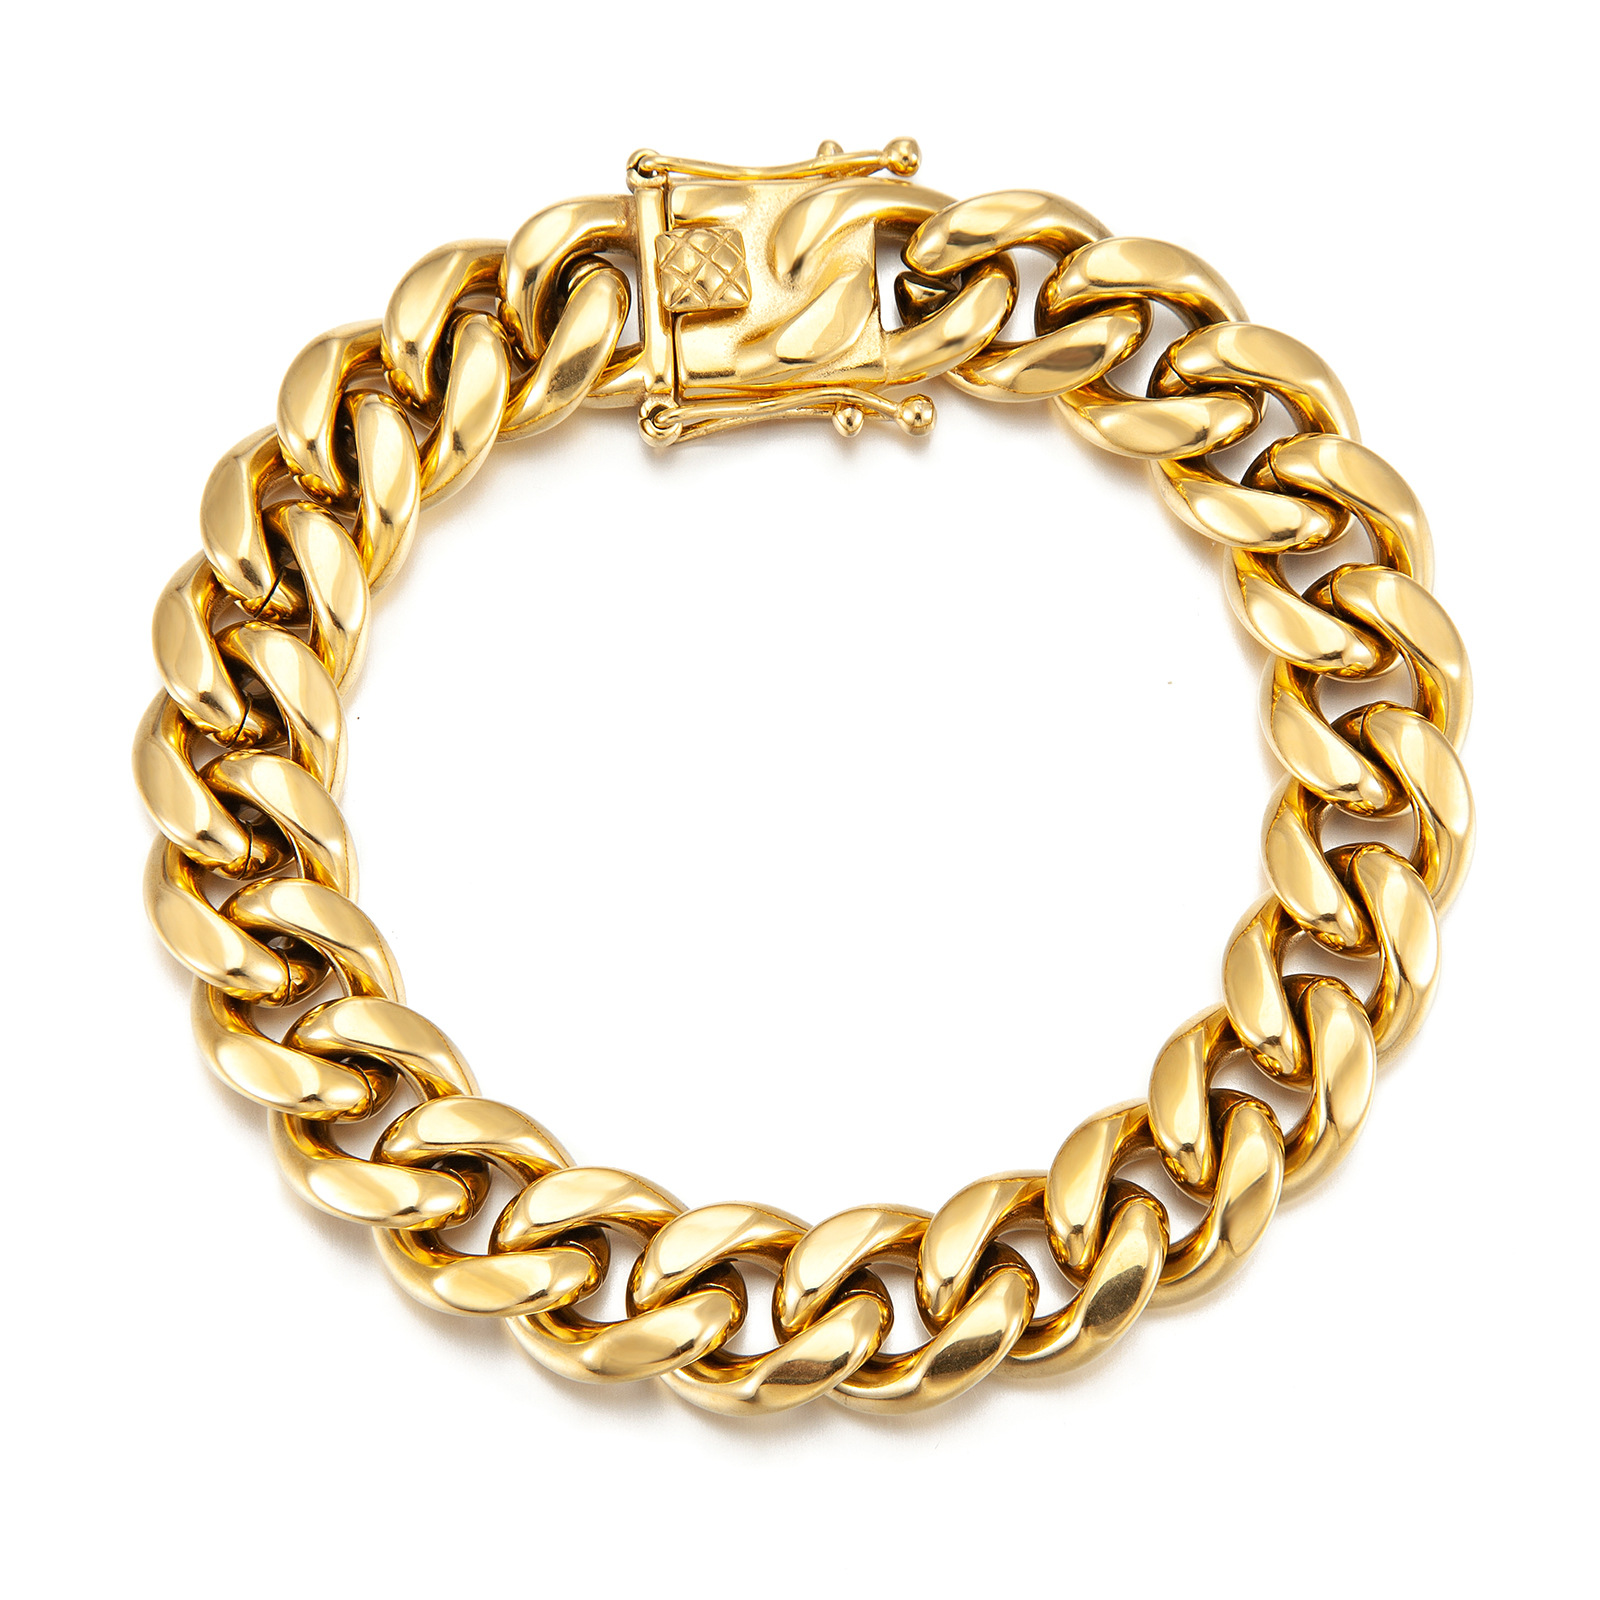 Bracelet Gold 14mm*22cm